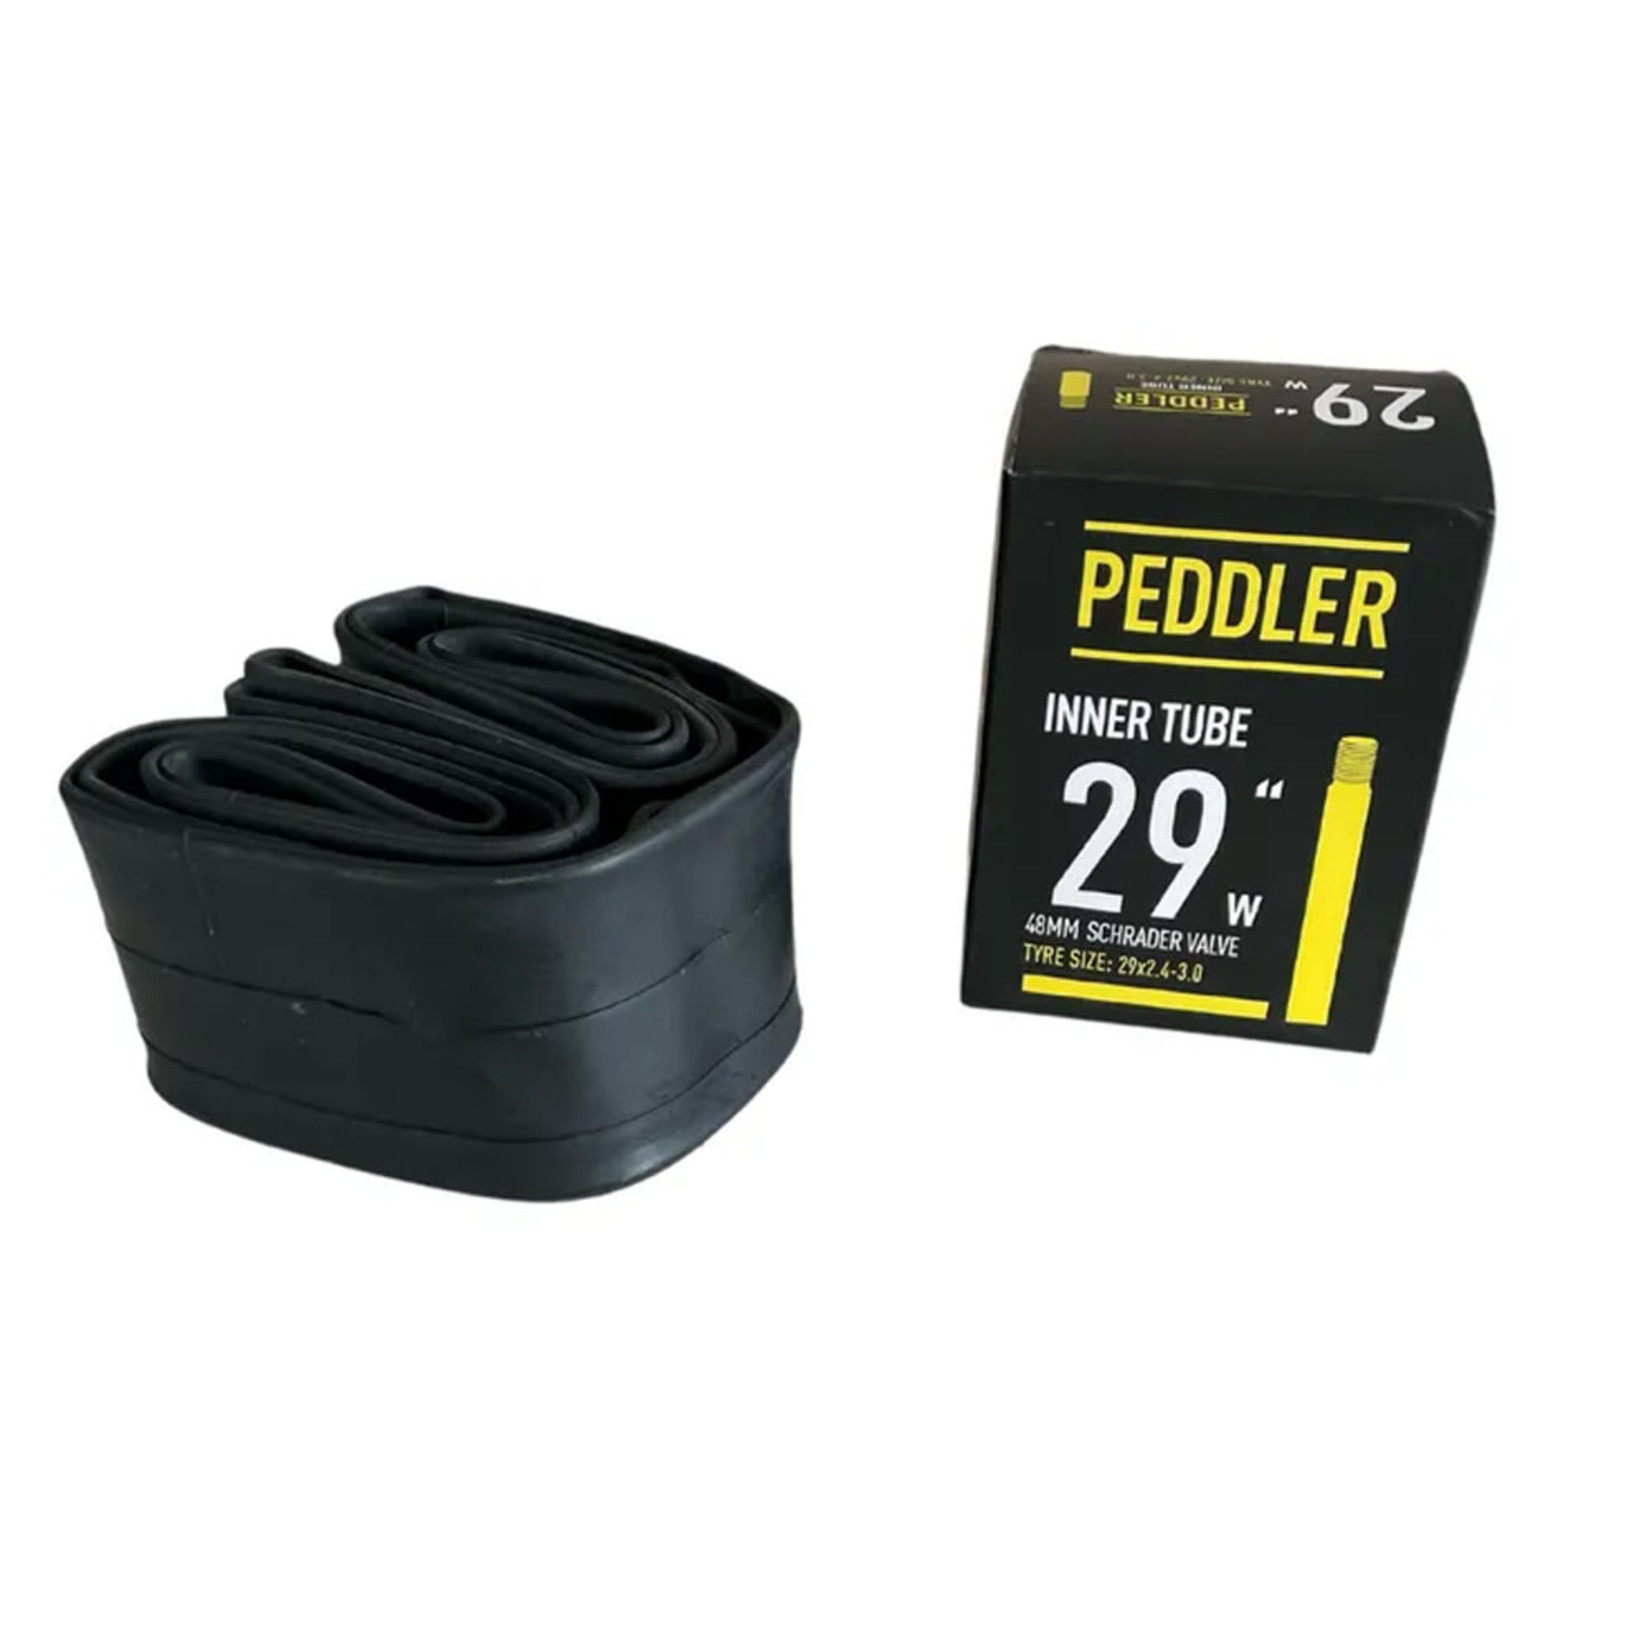 Bicycle Peddler Peddler Bike/Cycling Tube - 29 X 2.4-3.0 AV - 48mm - Pair